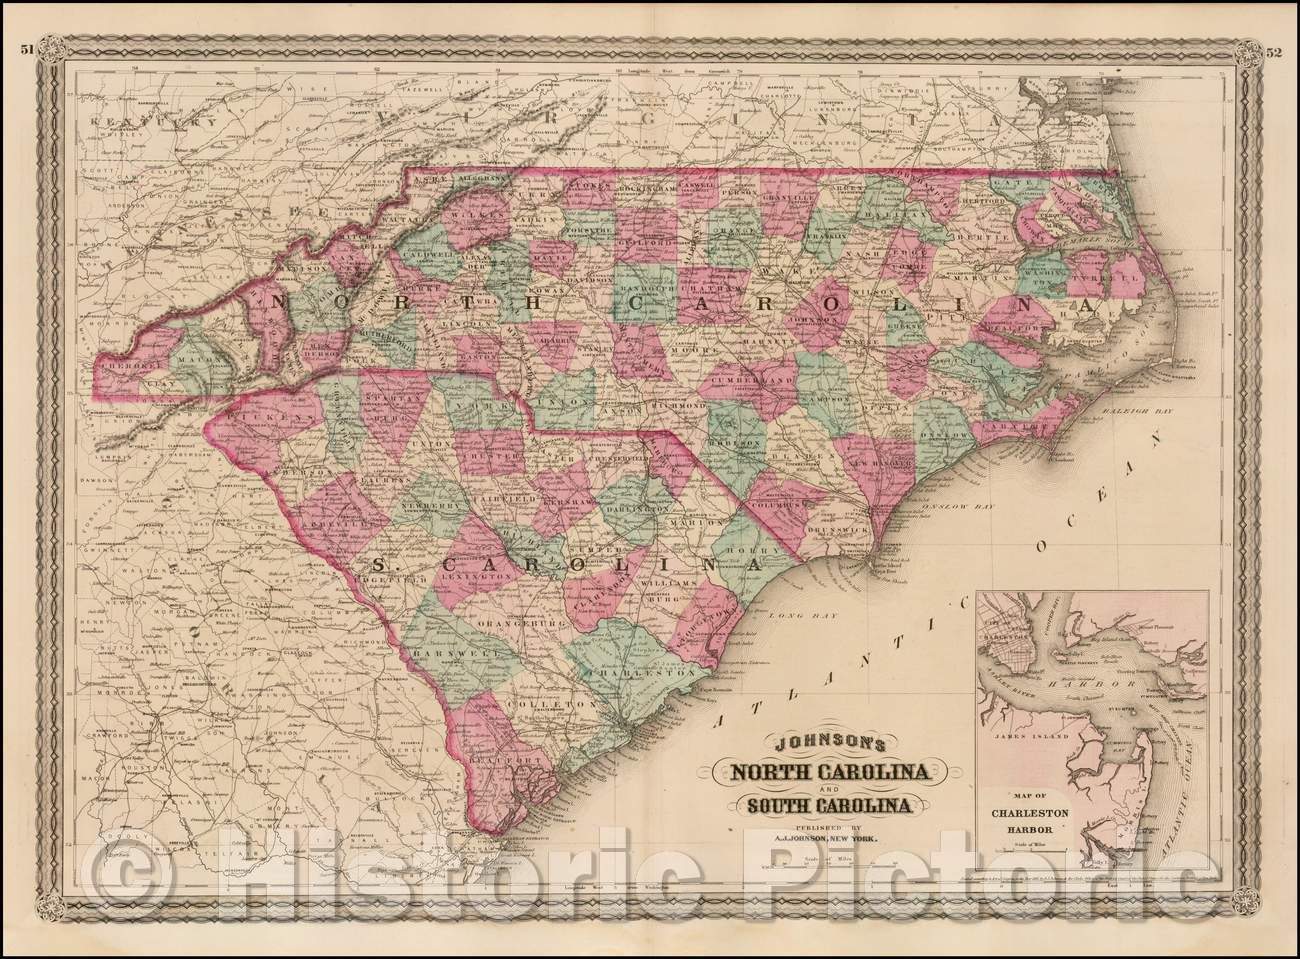 Historic Map - Johnson's North Carolina and South Carolina (with large inset of Charleston Harbor), 1870, Alvin Jewett Johnson v2